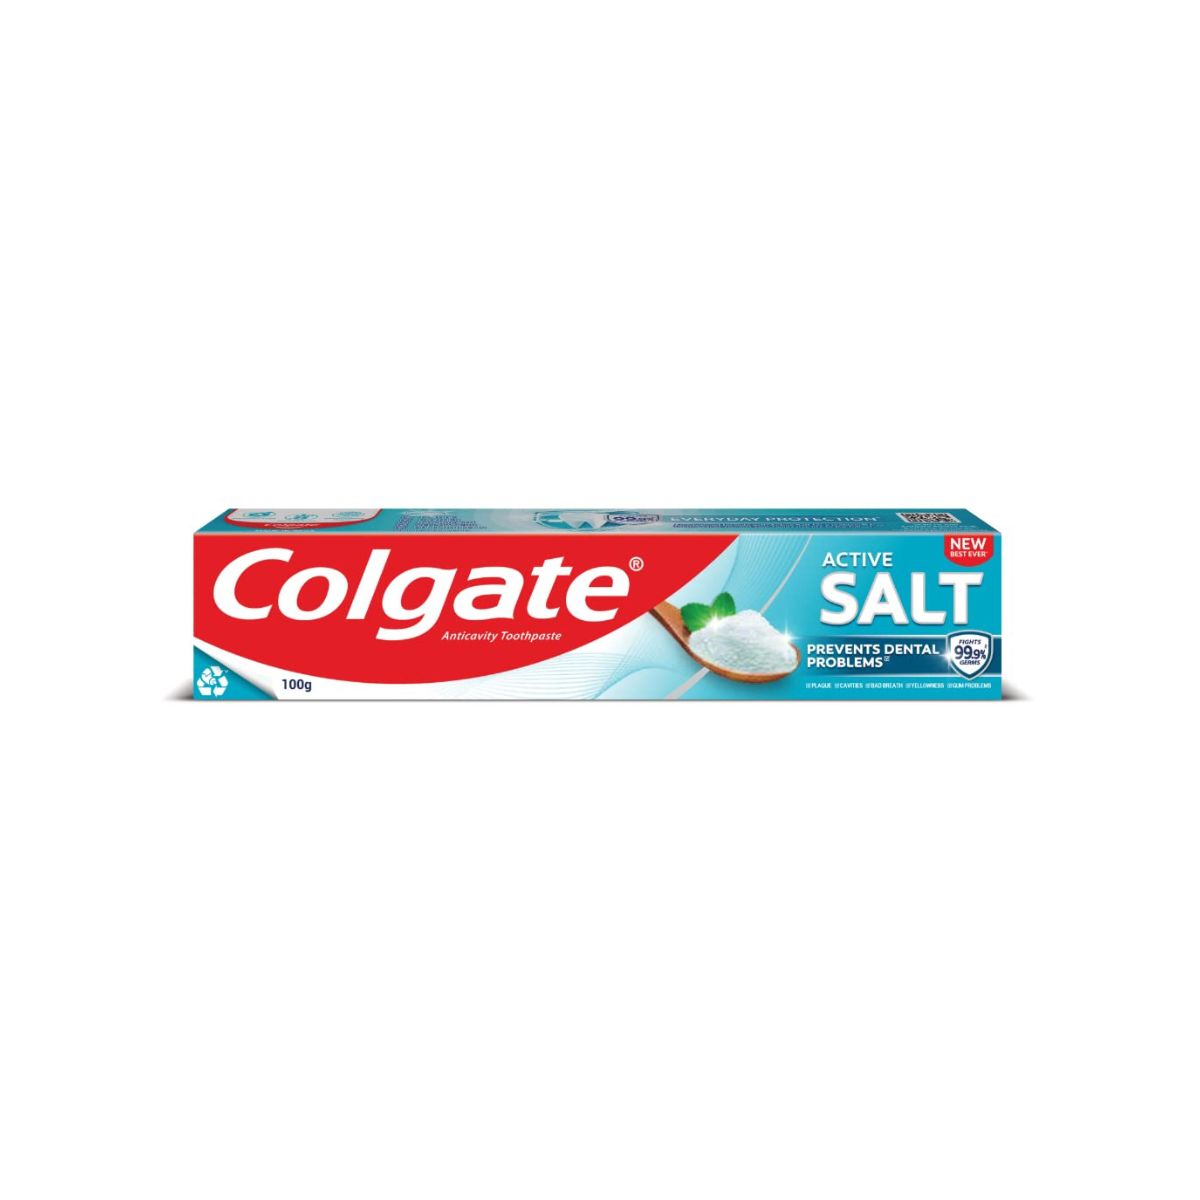 Colgate Anticavity Toothpaste - Active Salt - Prevents Dental Problems - 100g